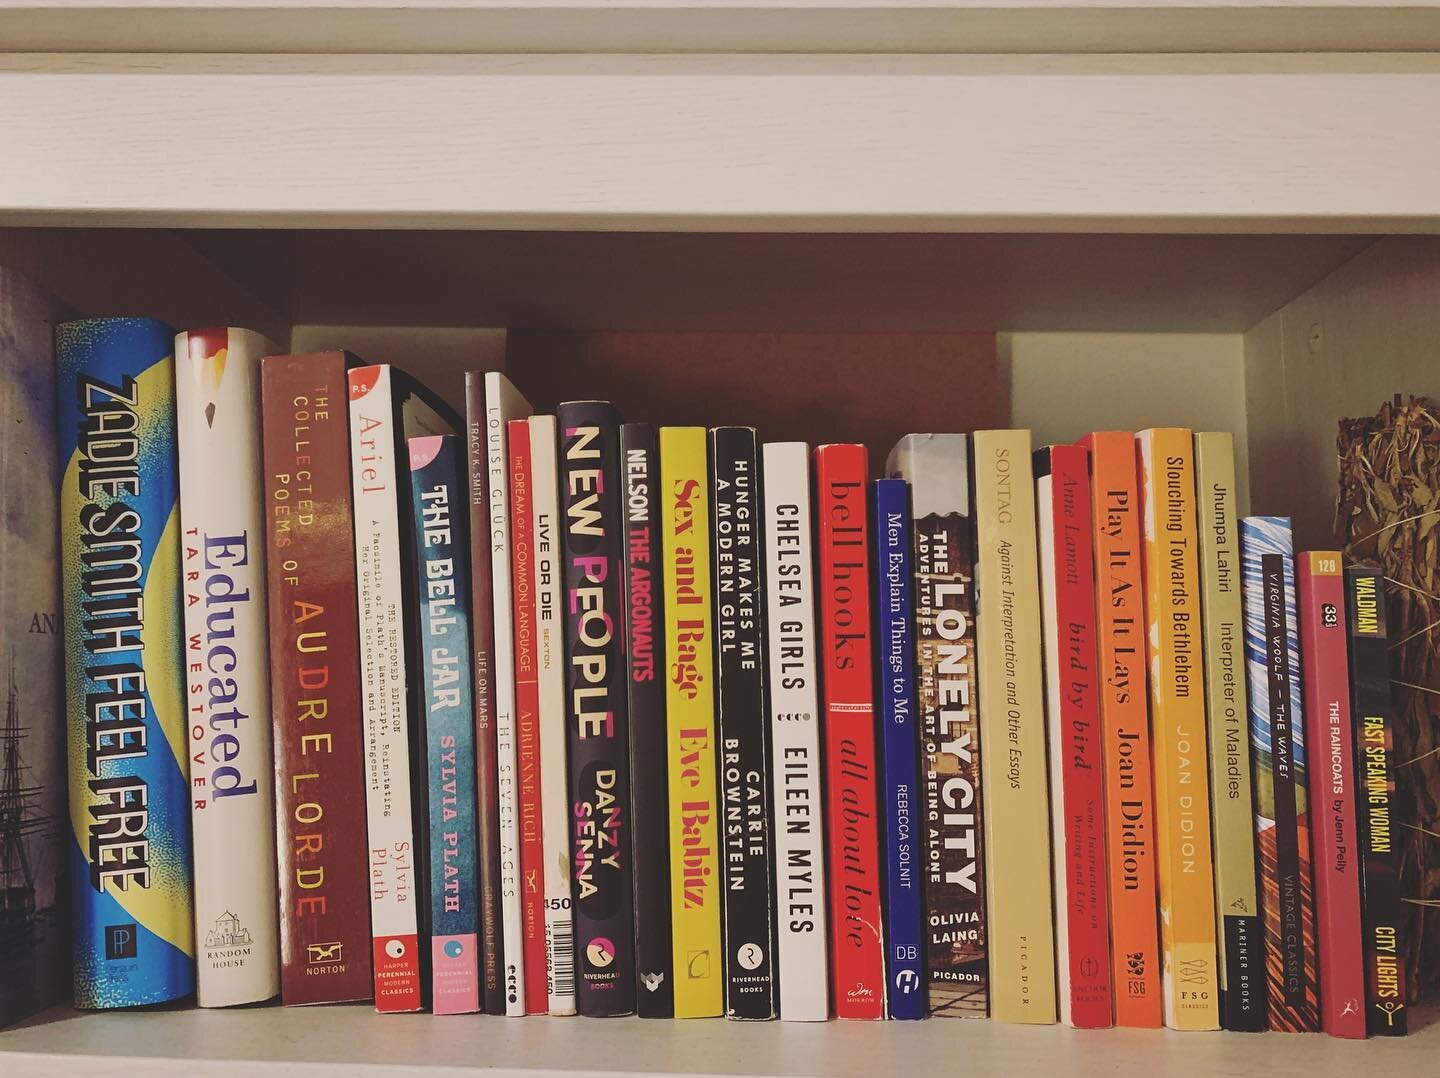 Just a little shelf-empowerment🤓🙃

#womenauthors #womenwriters #readersofinstagram #reading #read